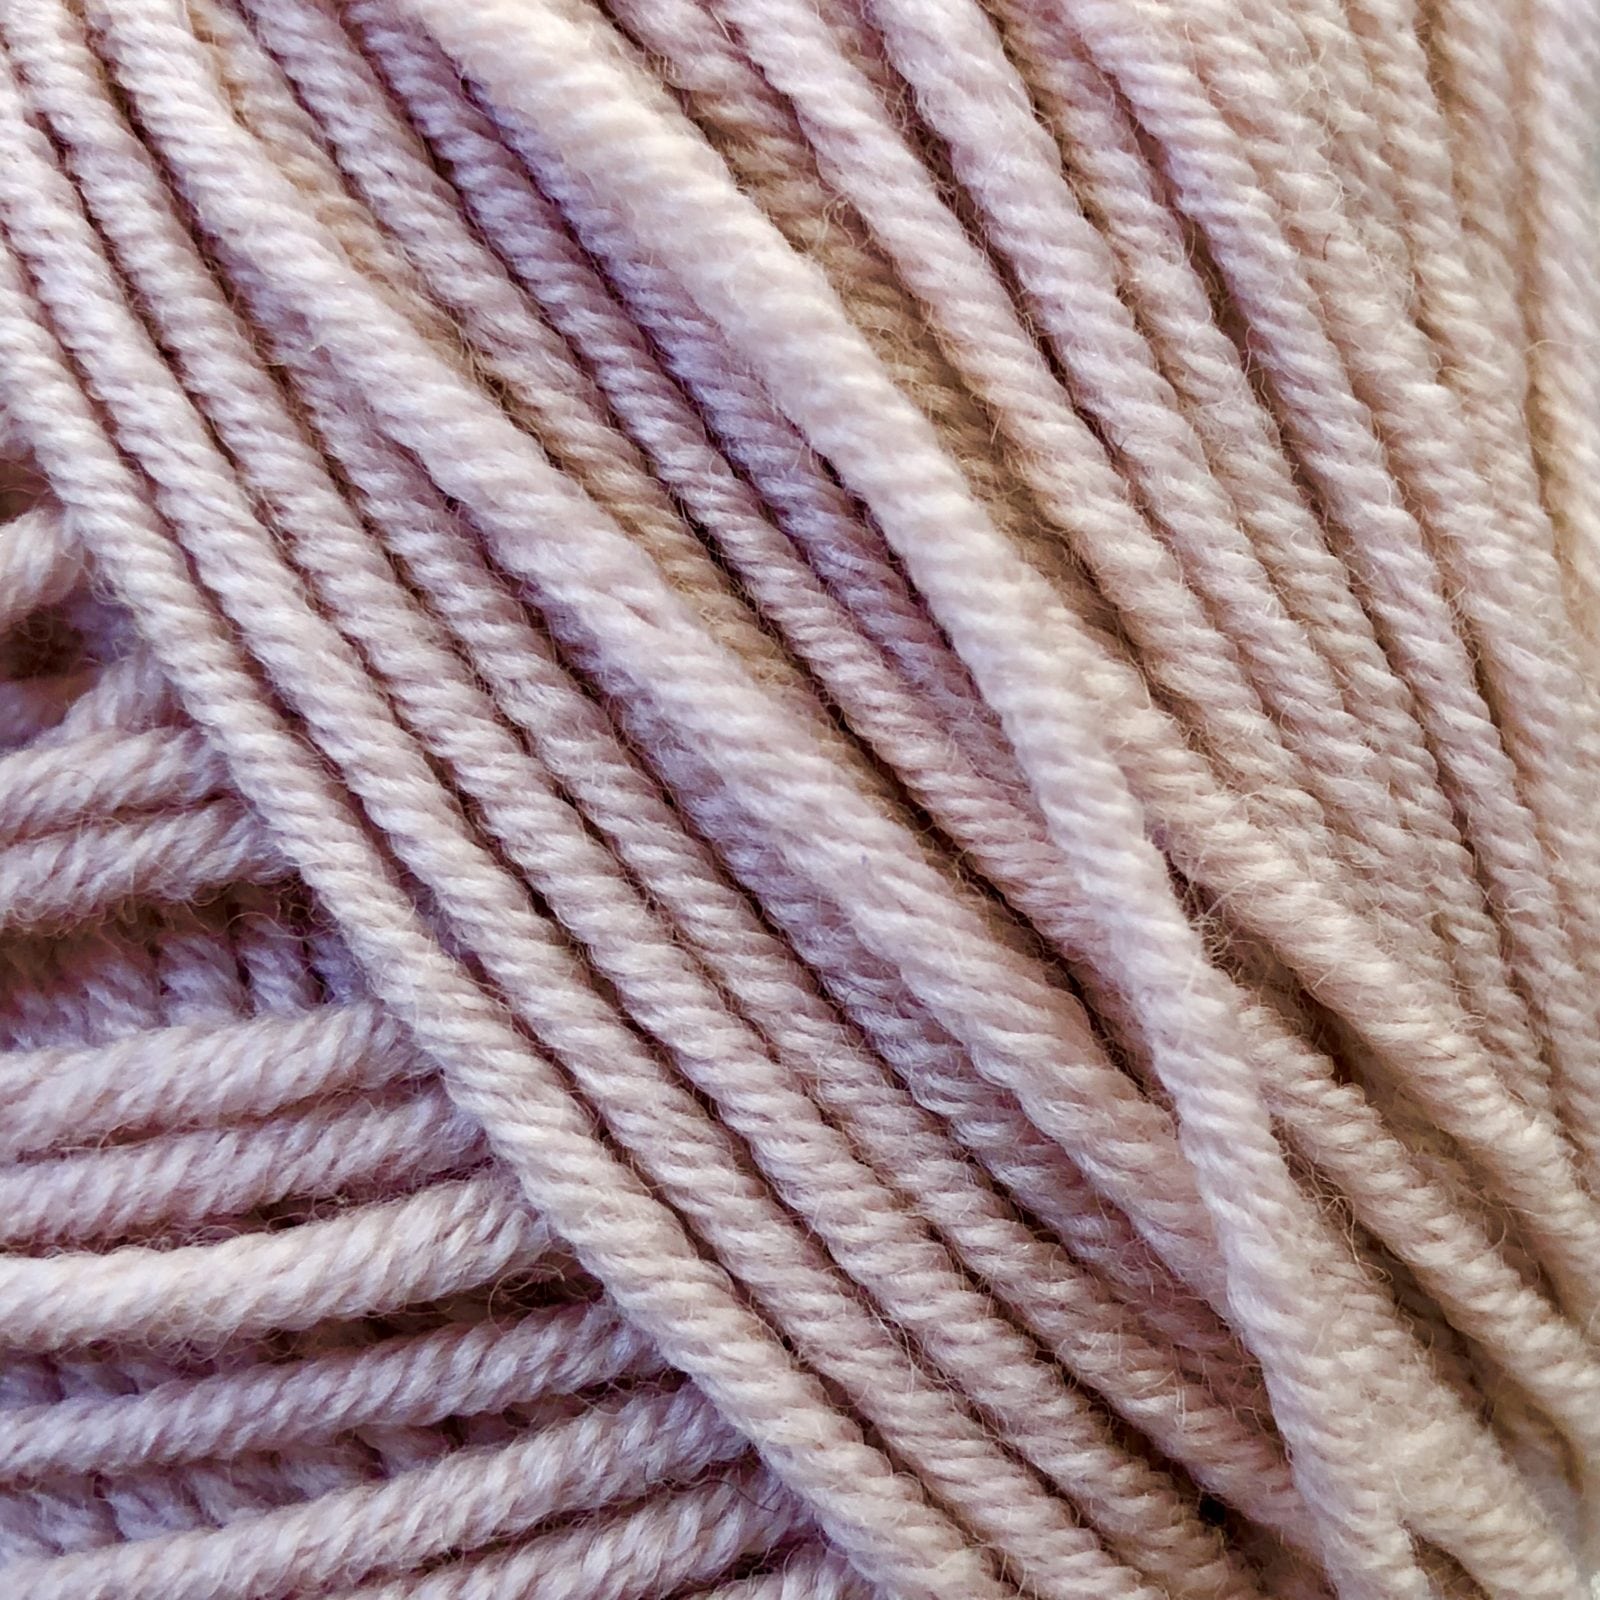 Broadway Yarns Merino 8ply double knit shade 1065